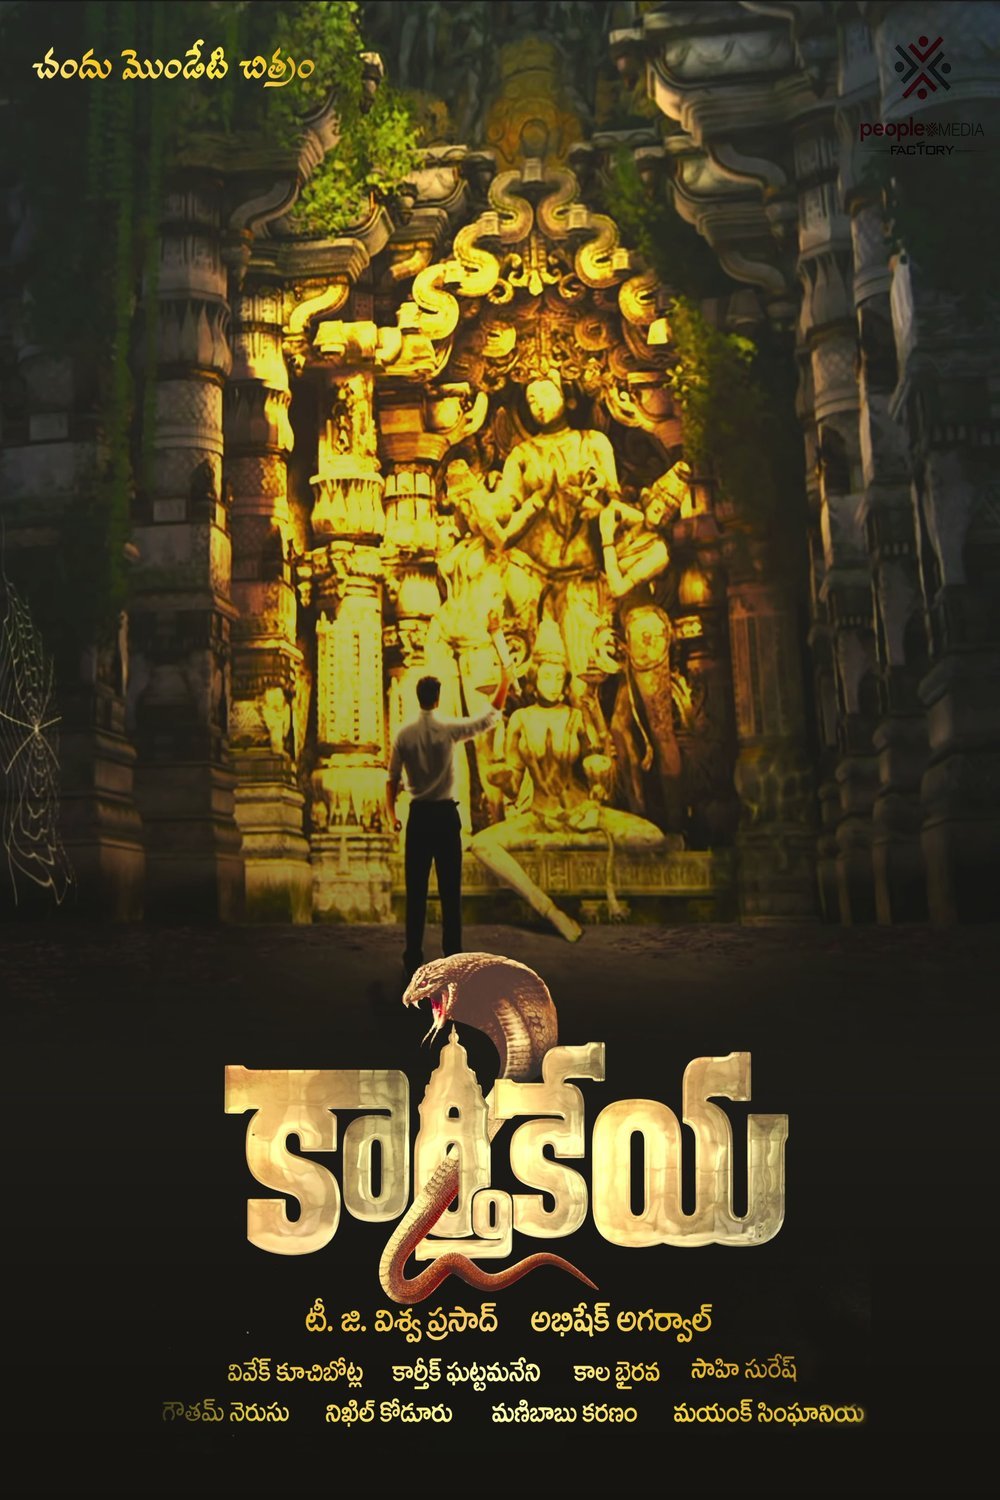 Telugu poster of the movie Karthikeya 2